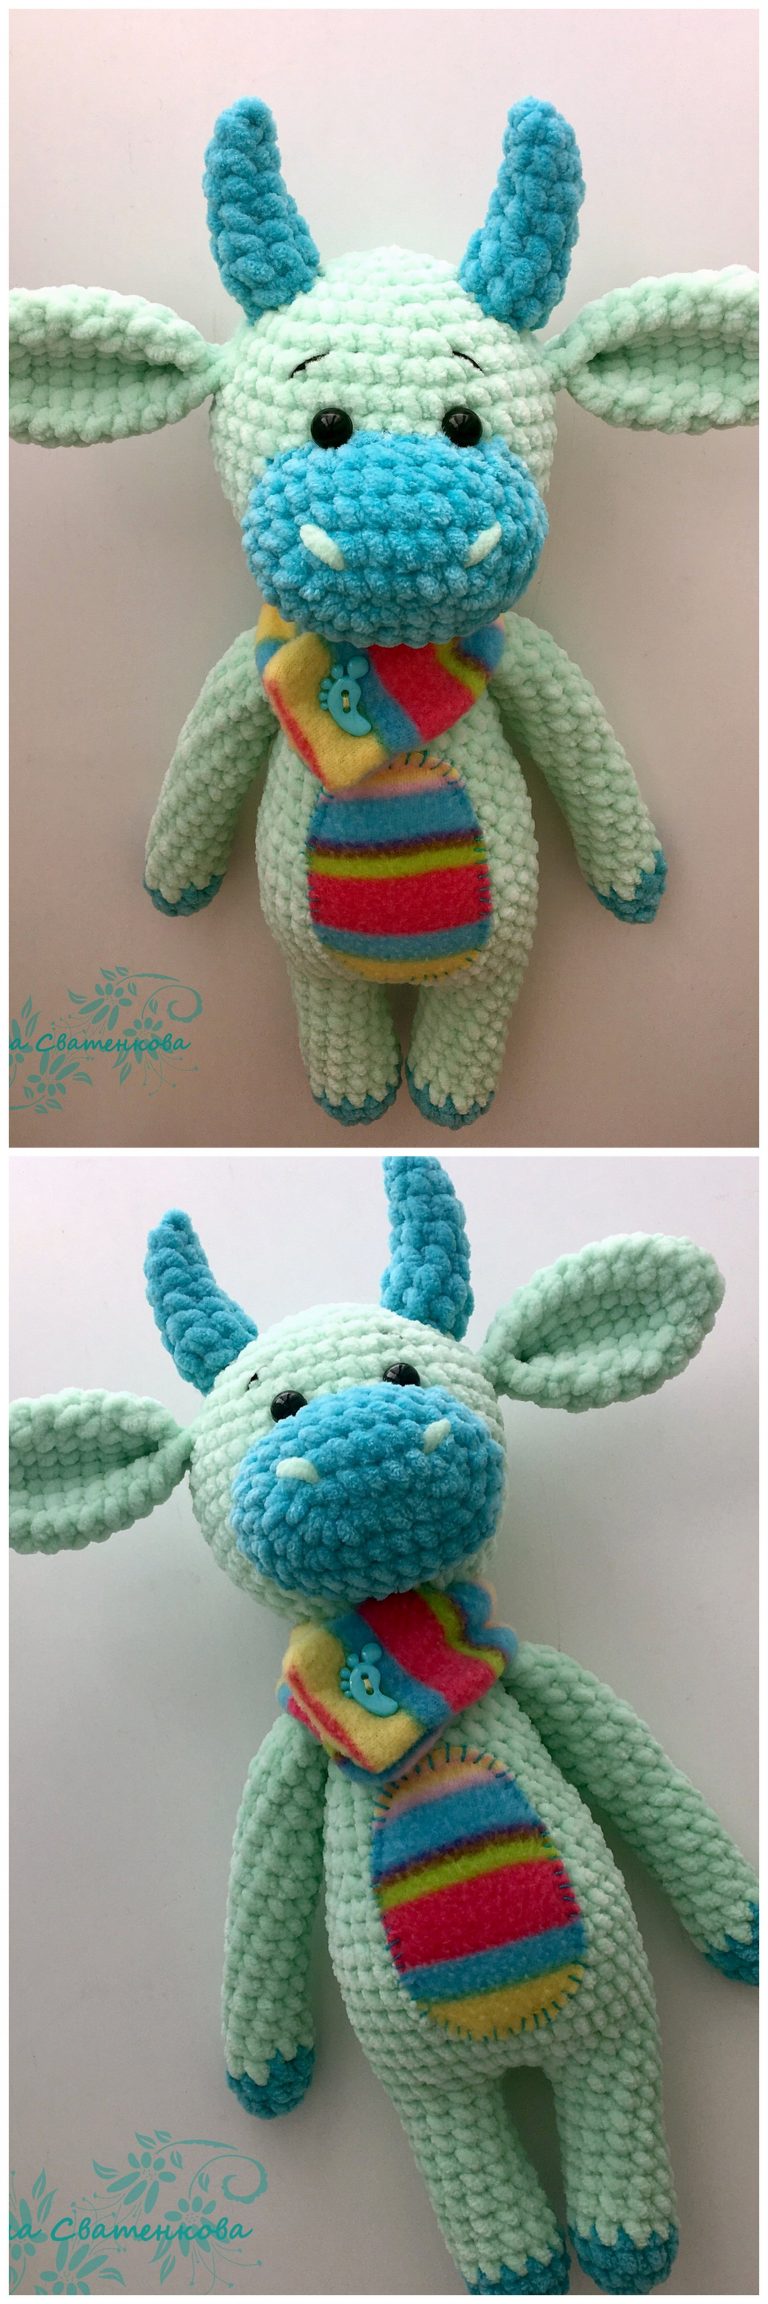 Amigurumi Baby Charlie Free Crochet Pattern